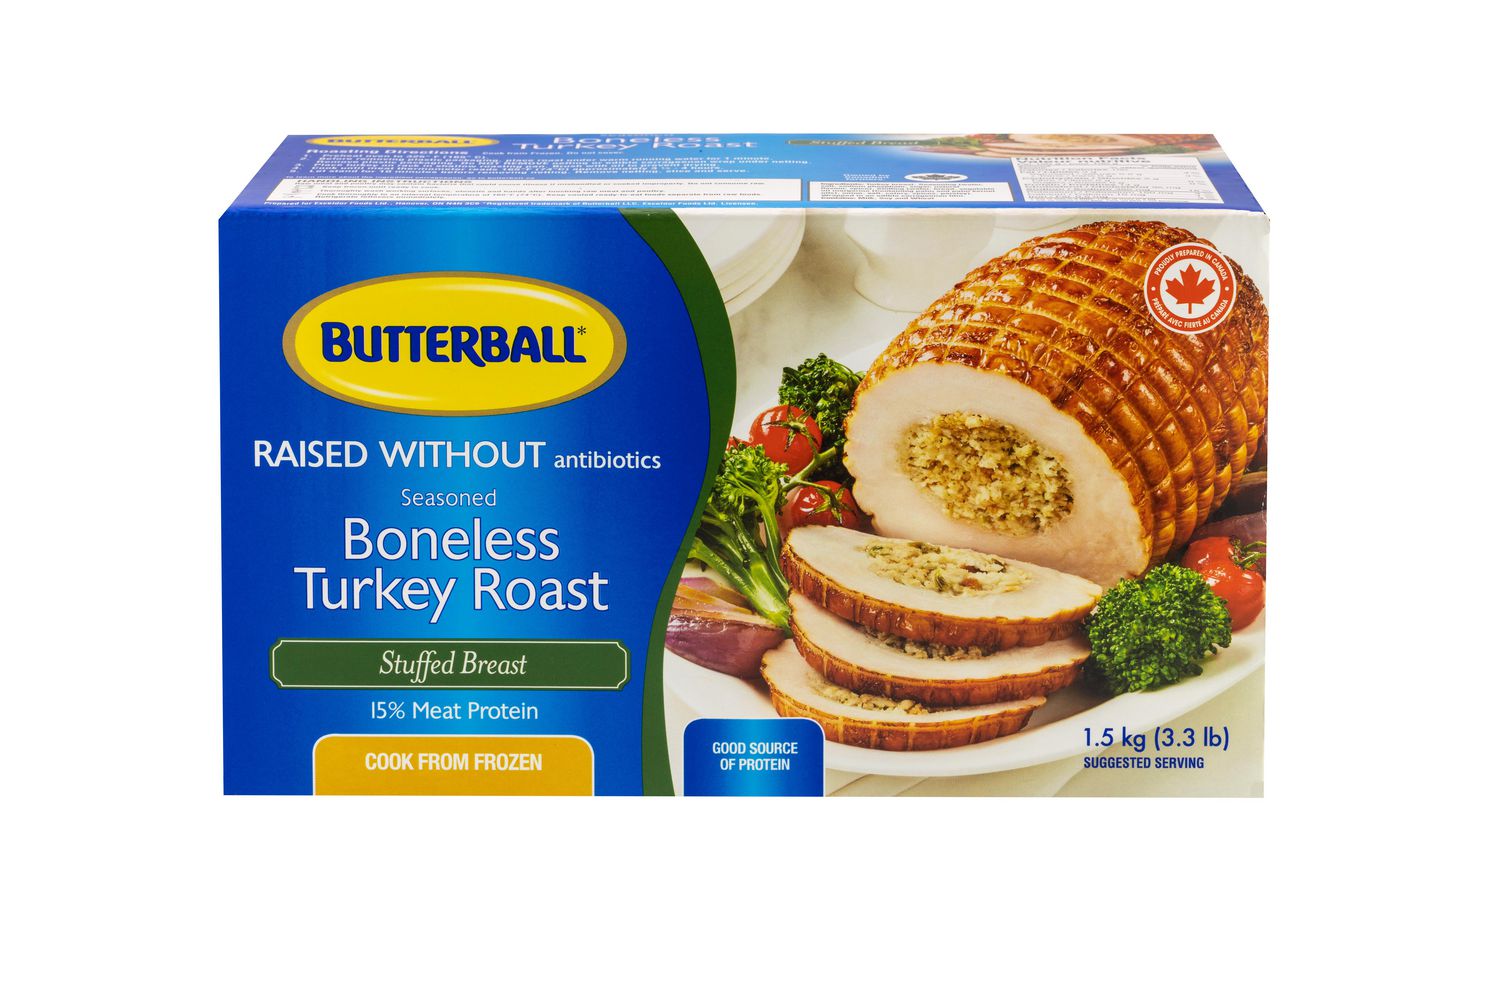 butterball-boneless-turkey-roast-stuffed-breast-raised-without